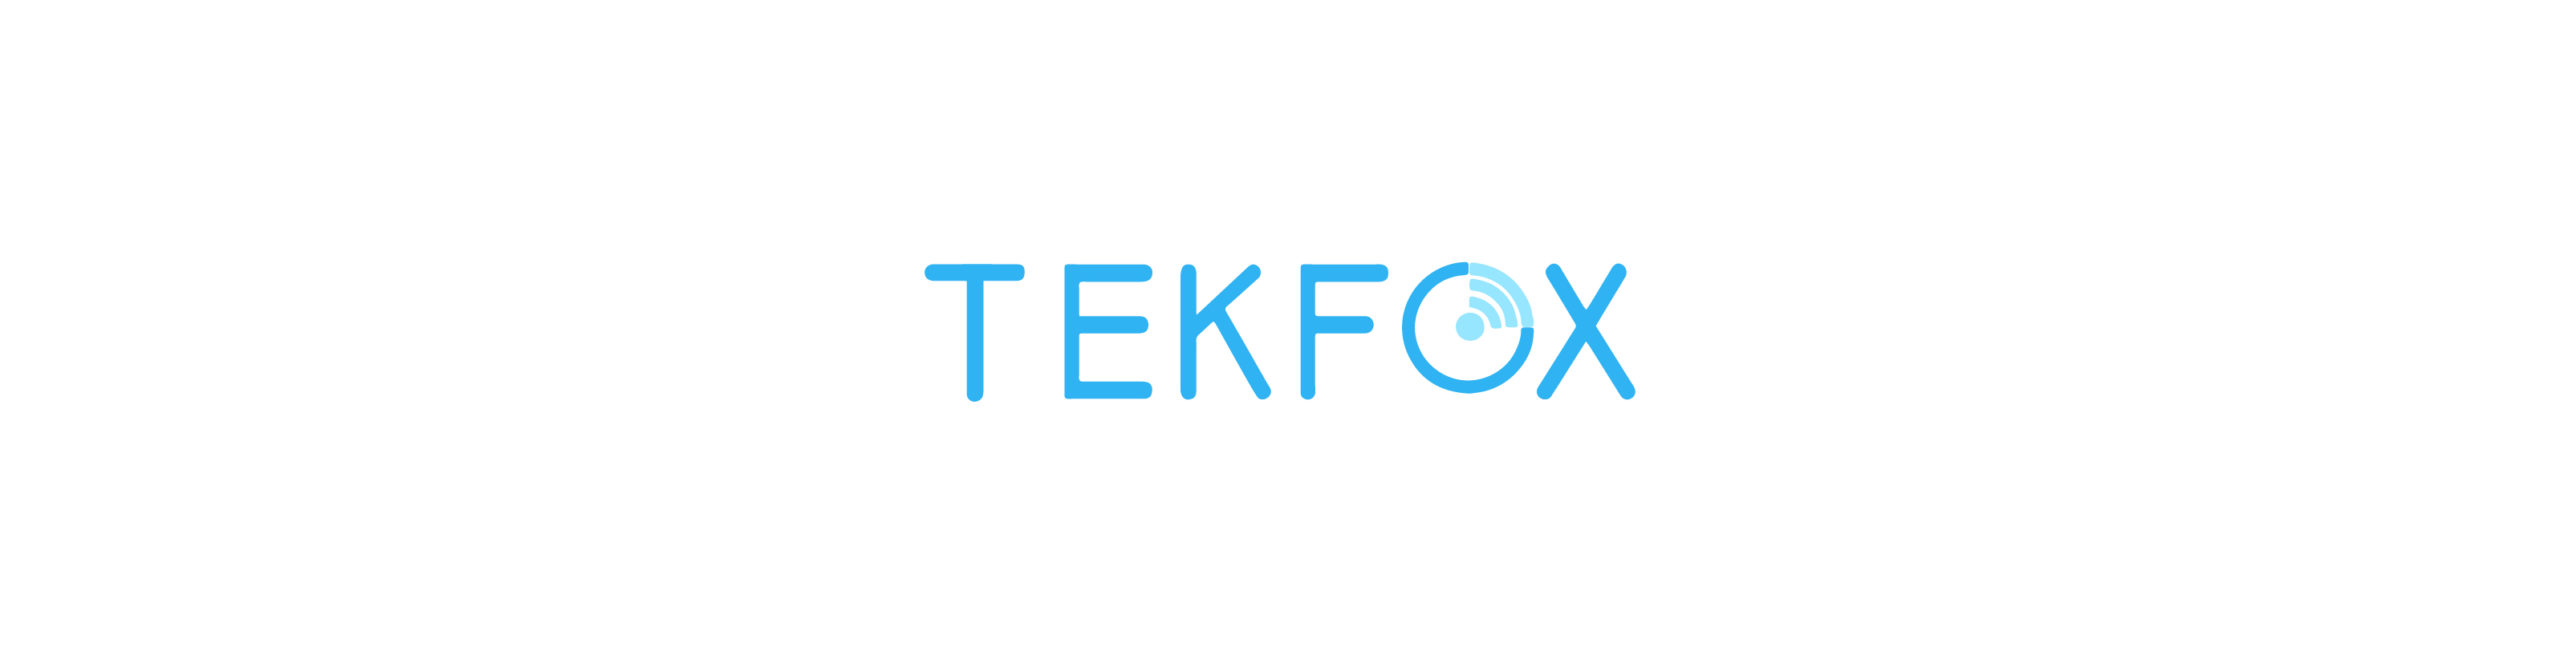 Tekfox logo